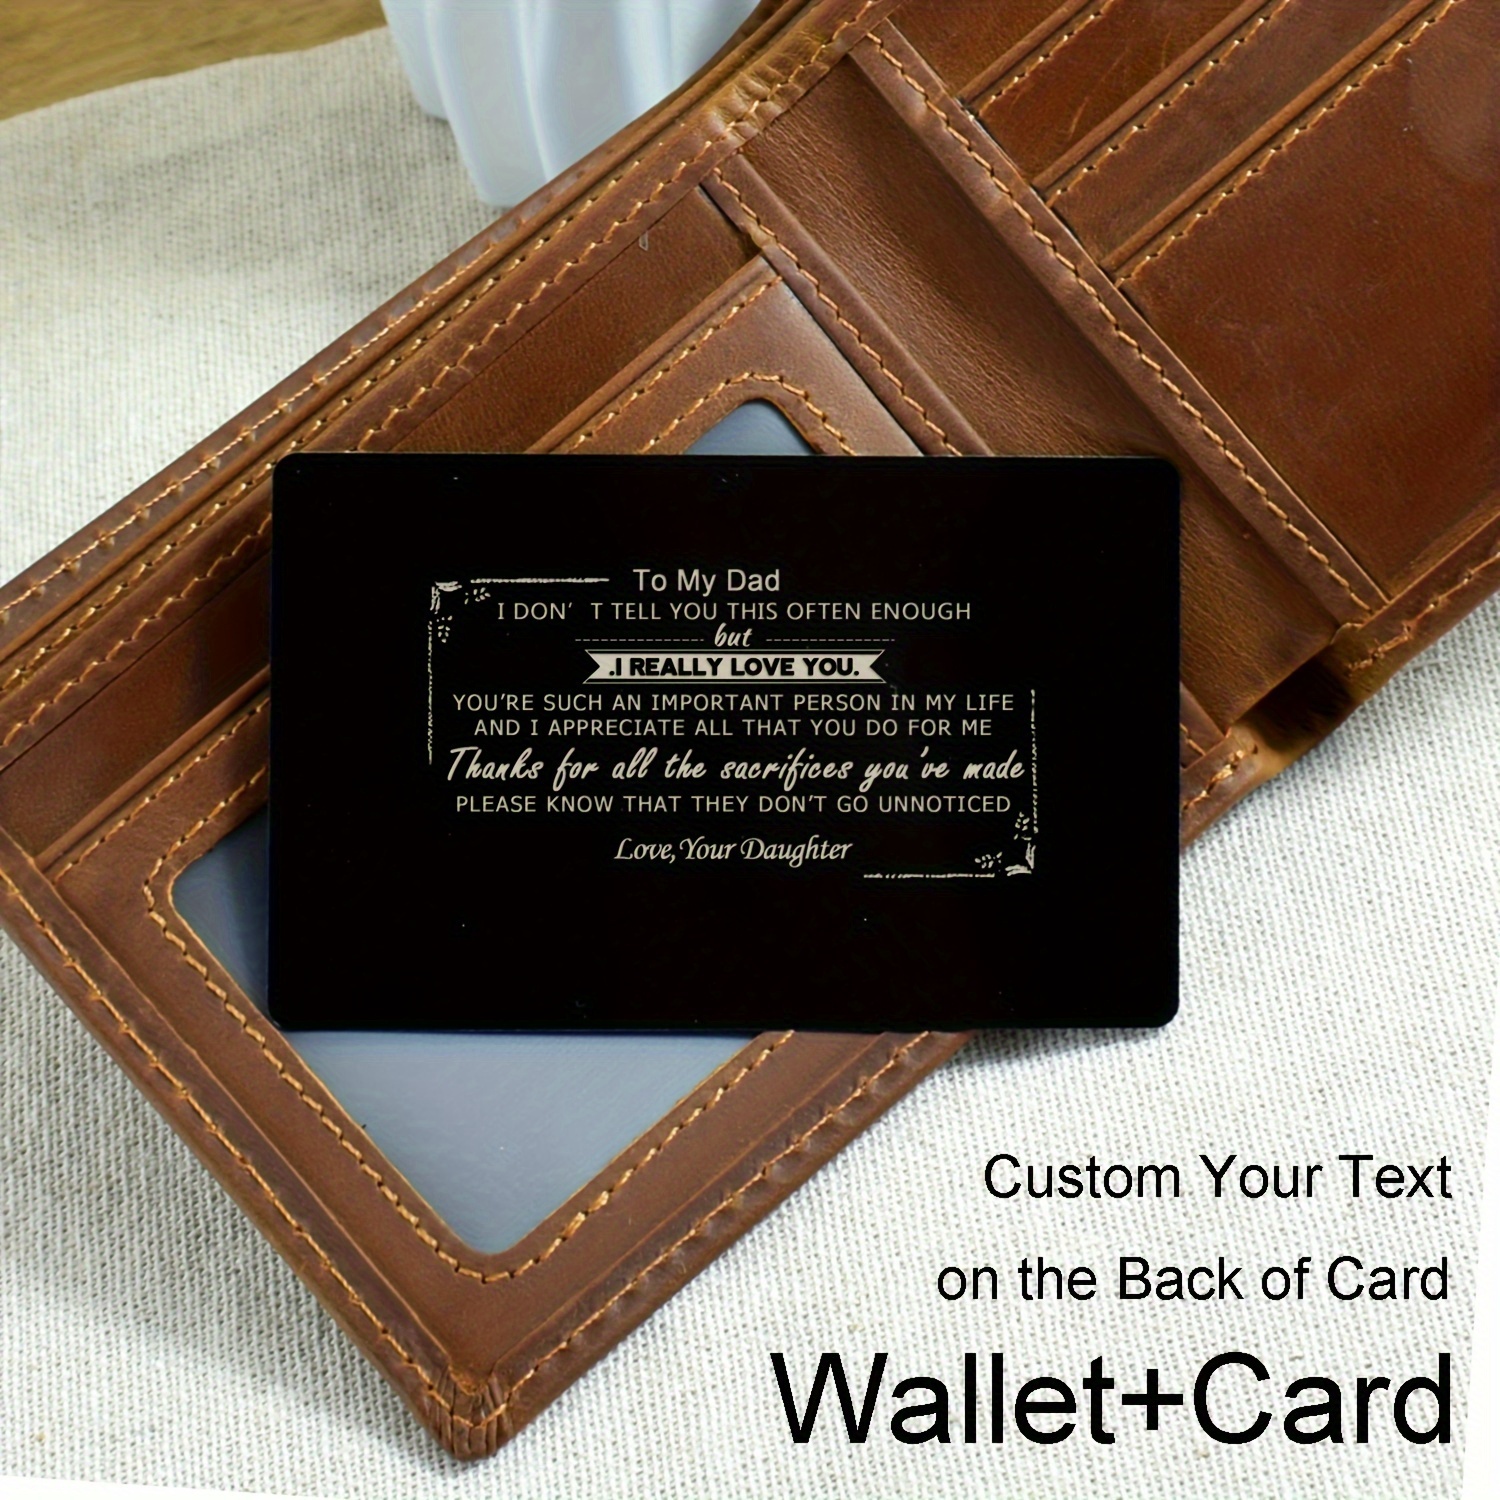 wallet mens long leather wallet Slim Clutch Bag luxury Men Wallet Genuine Leather  mens wallet leather clutch bag men 302-Black